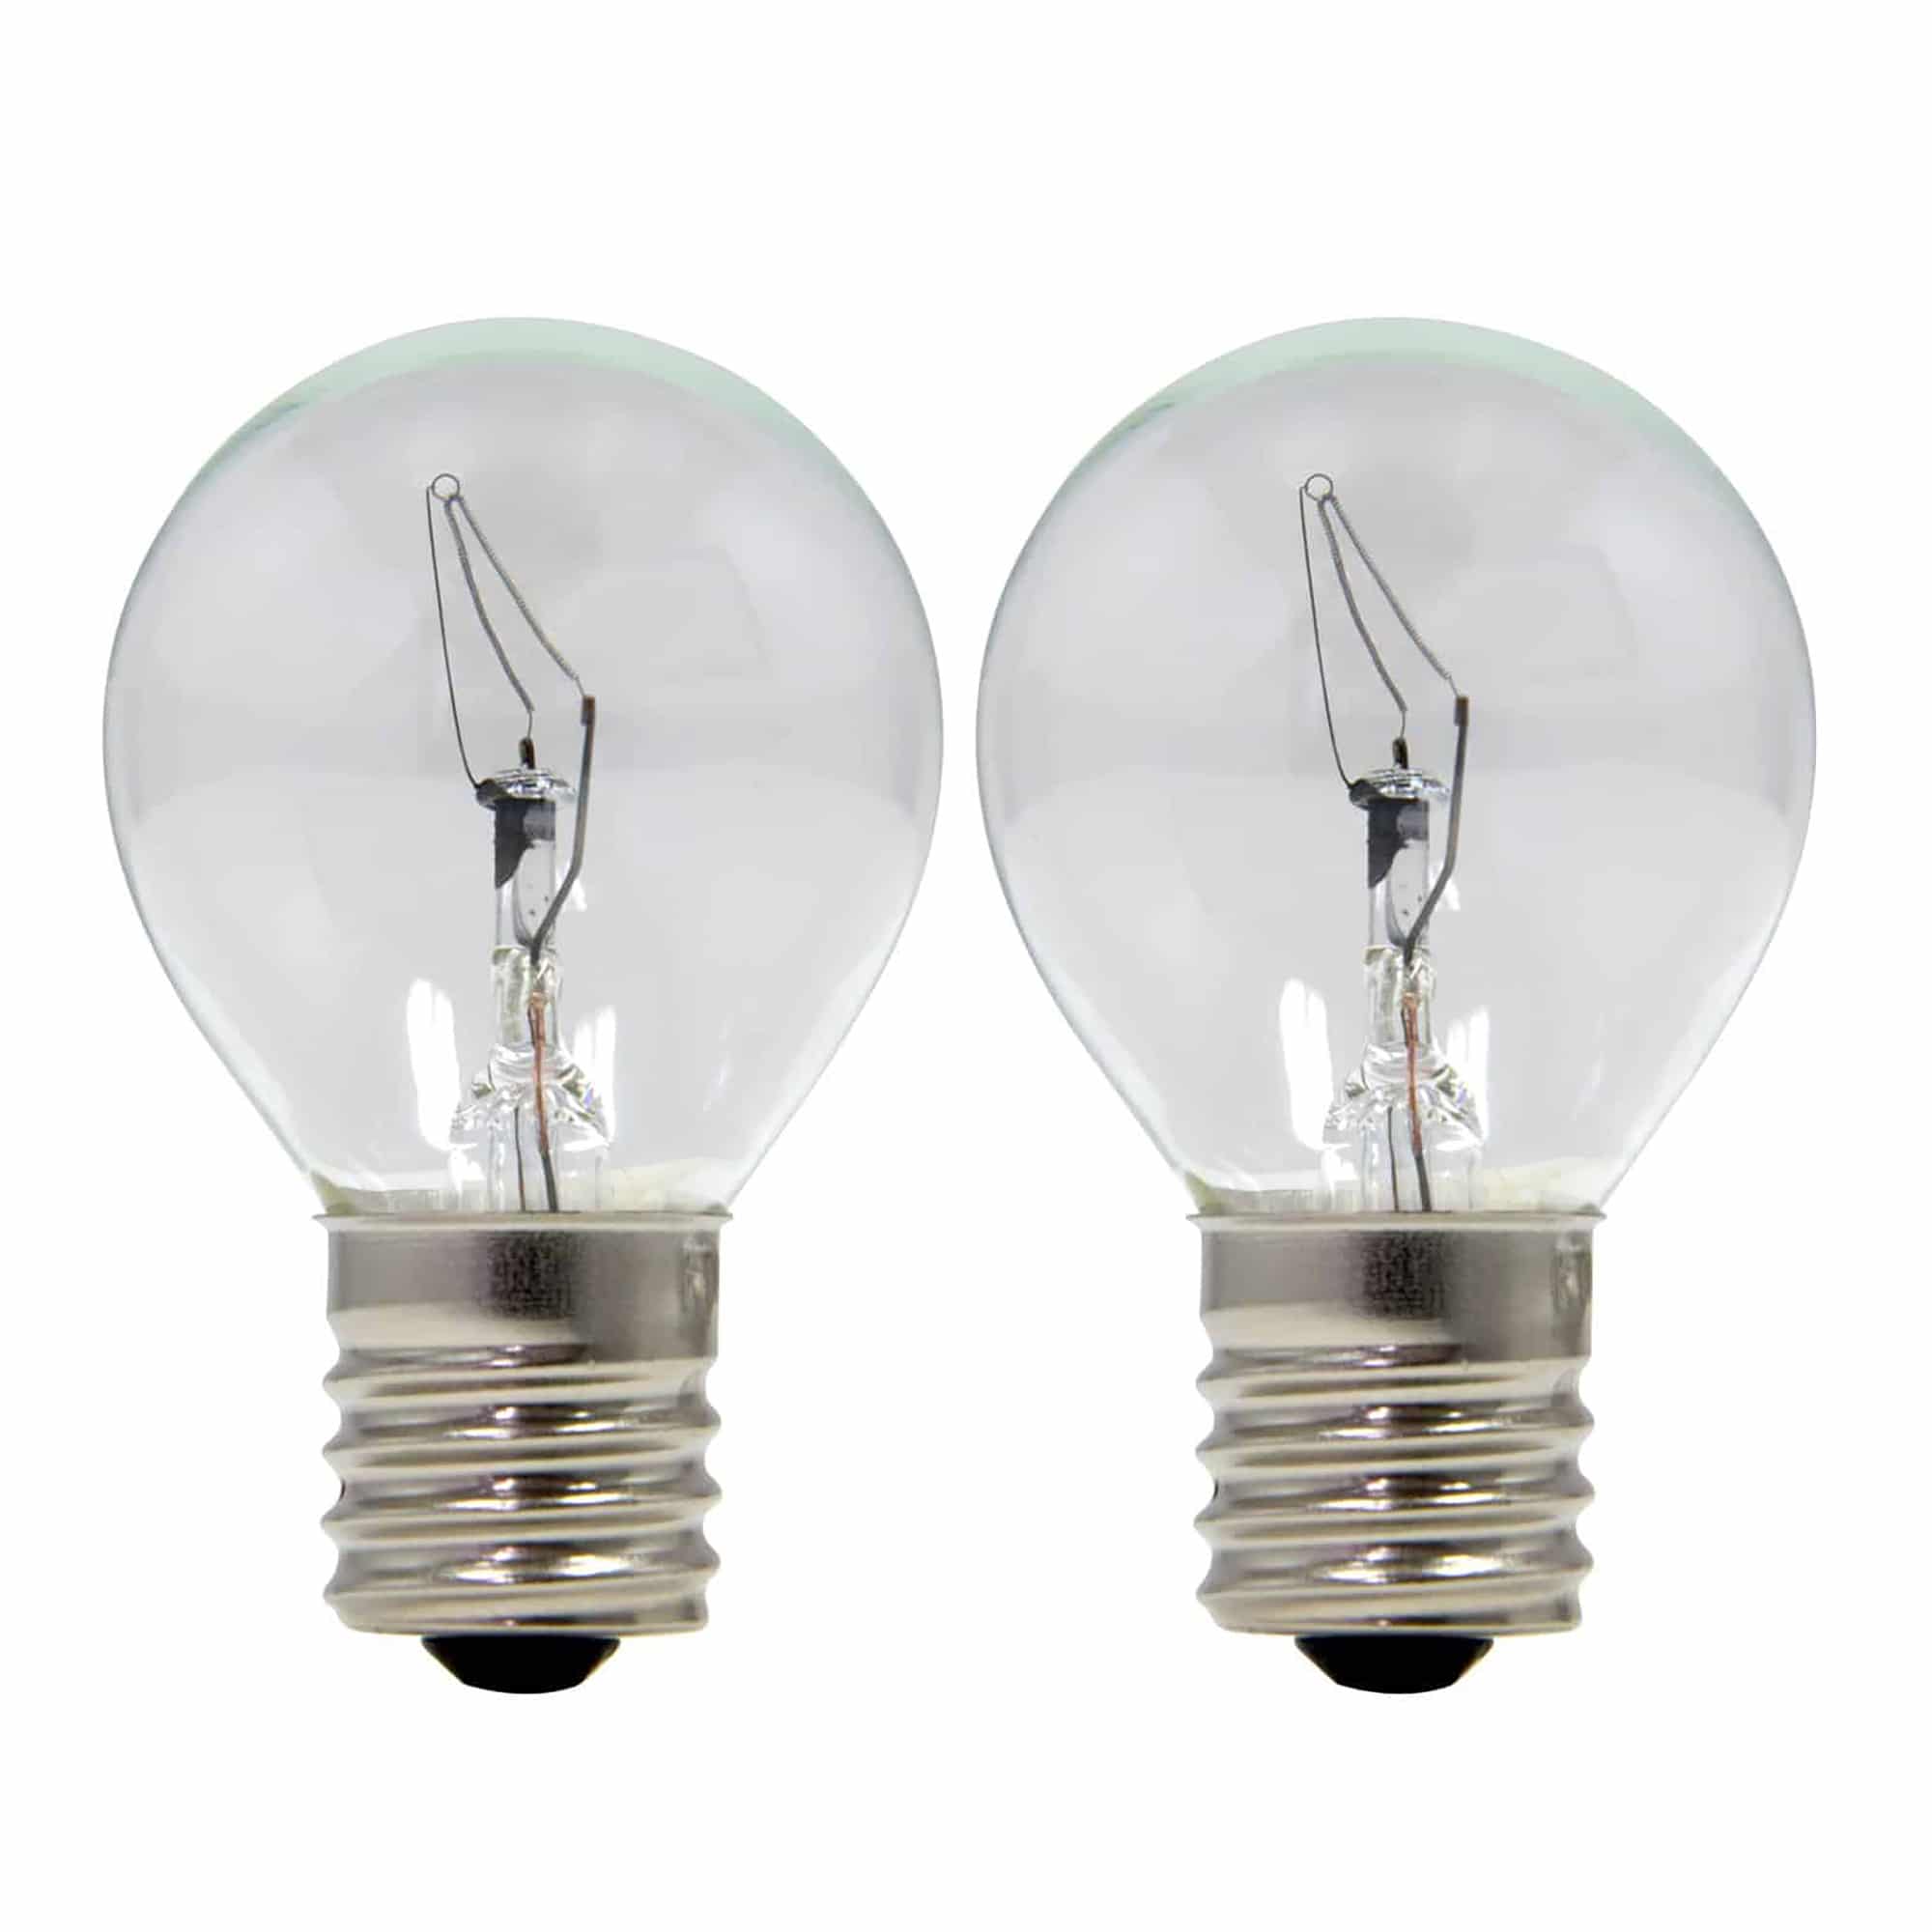 Light Bulbs - 40 Watt-Decor & Keepsakes-Schylling-Yellow Springs Toy Company